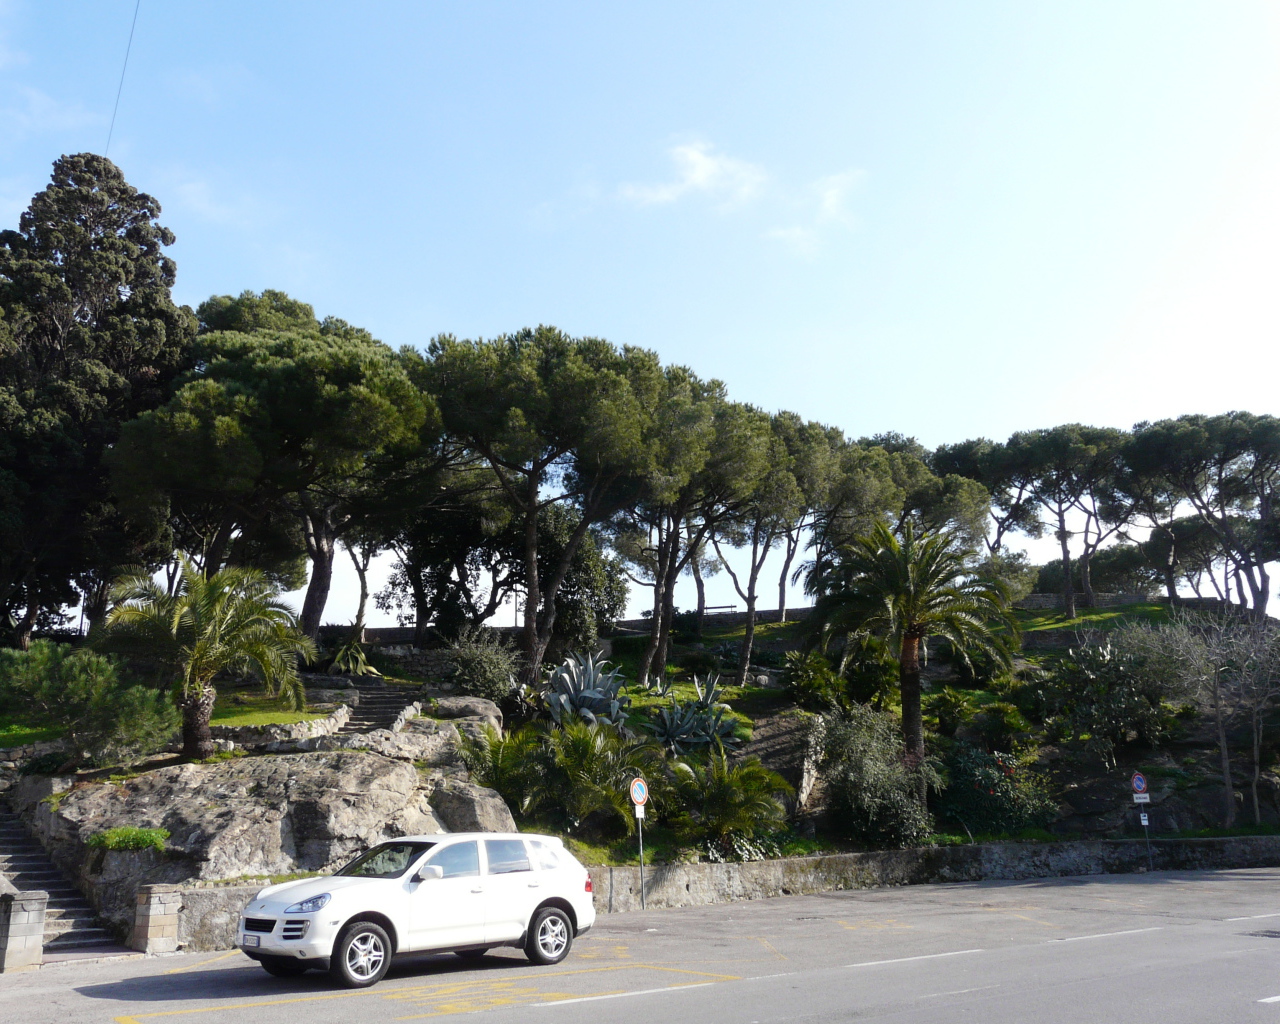 Trees on coast in the resort of Bordighera, Italy